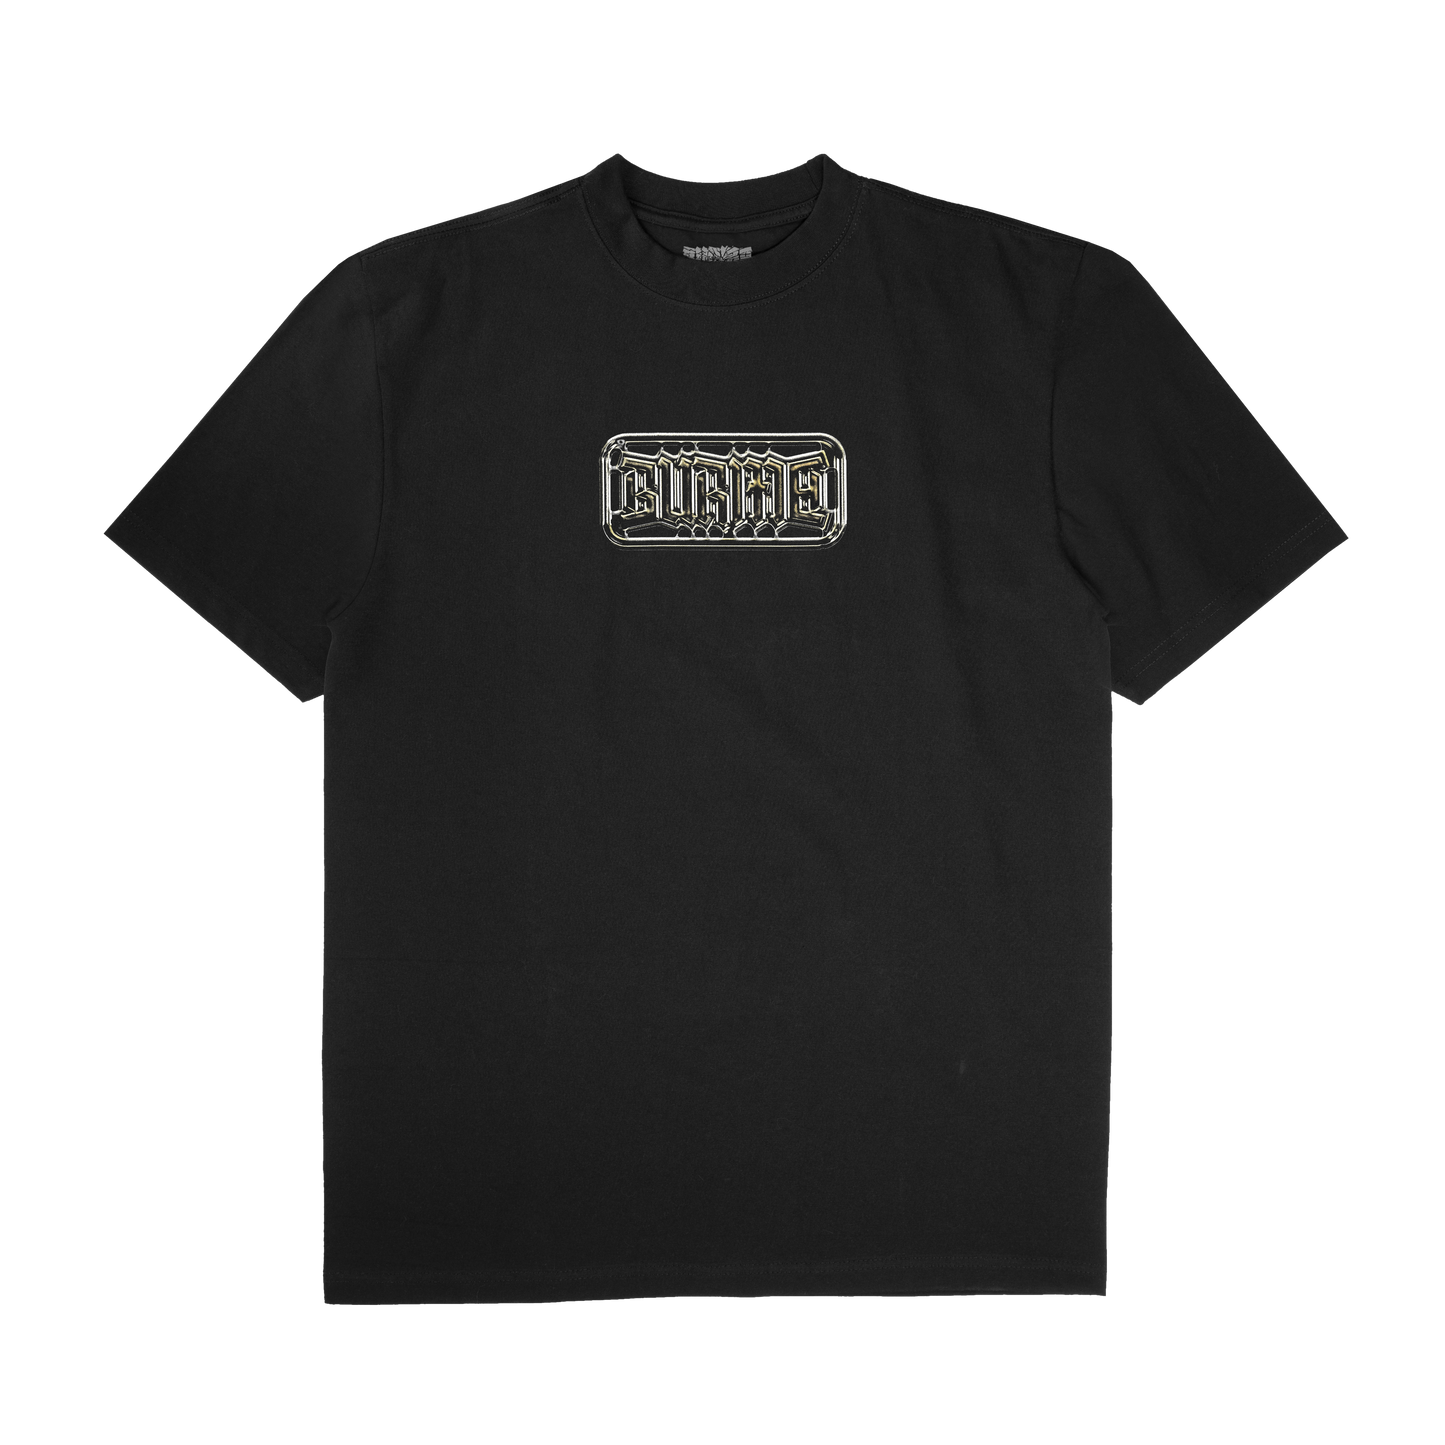 "Emblem" T-Shirt (Black)